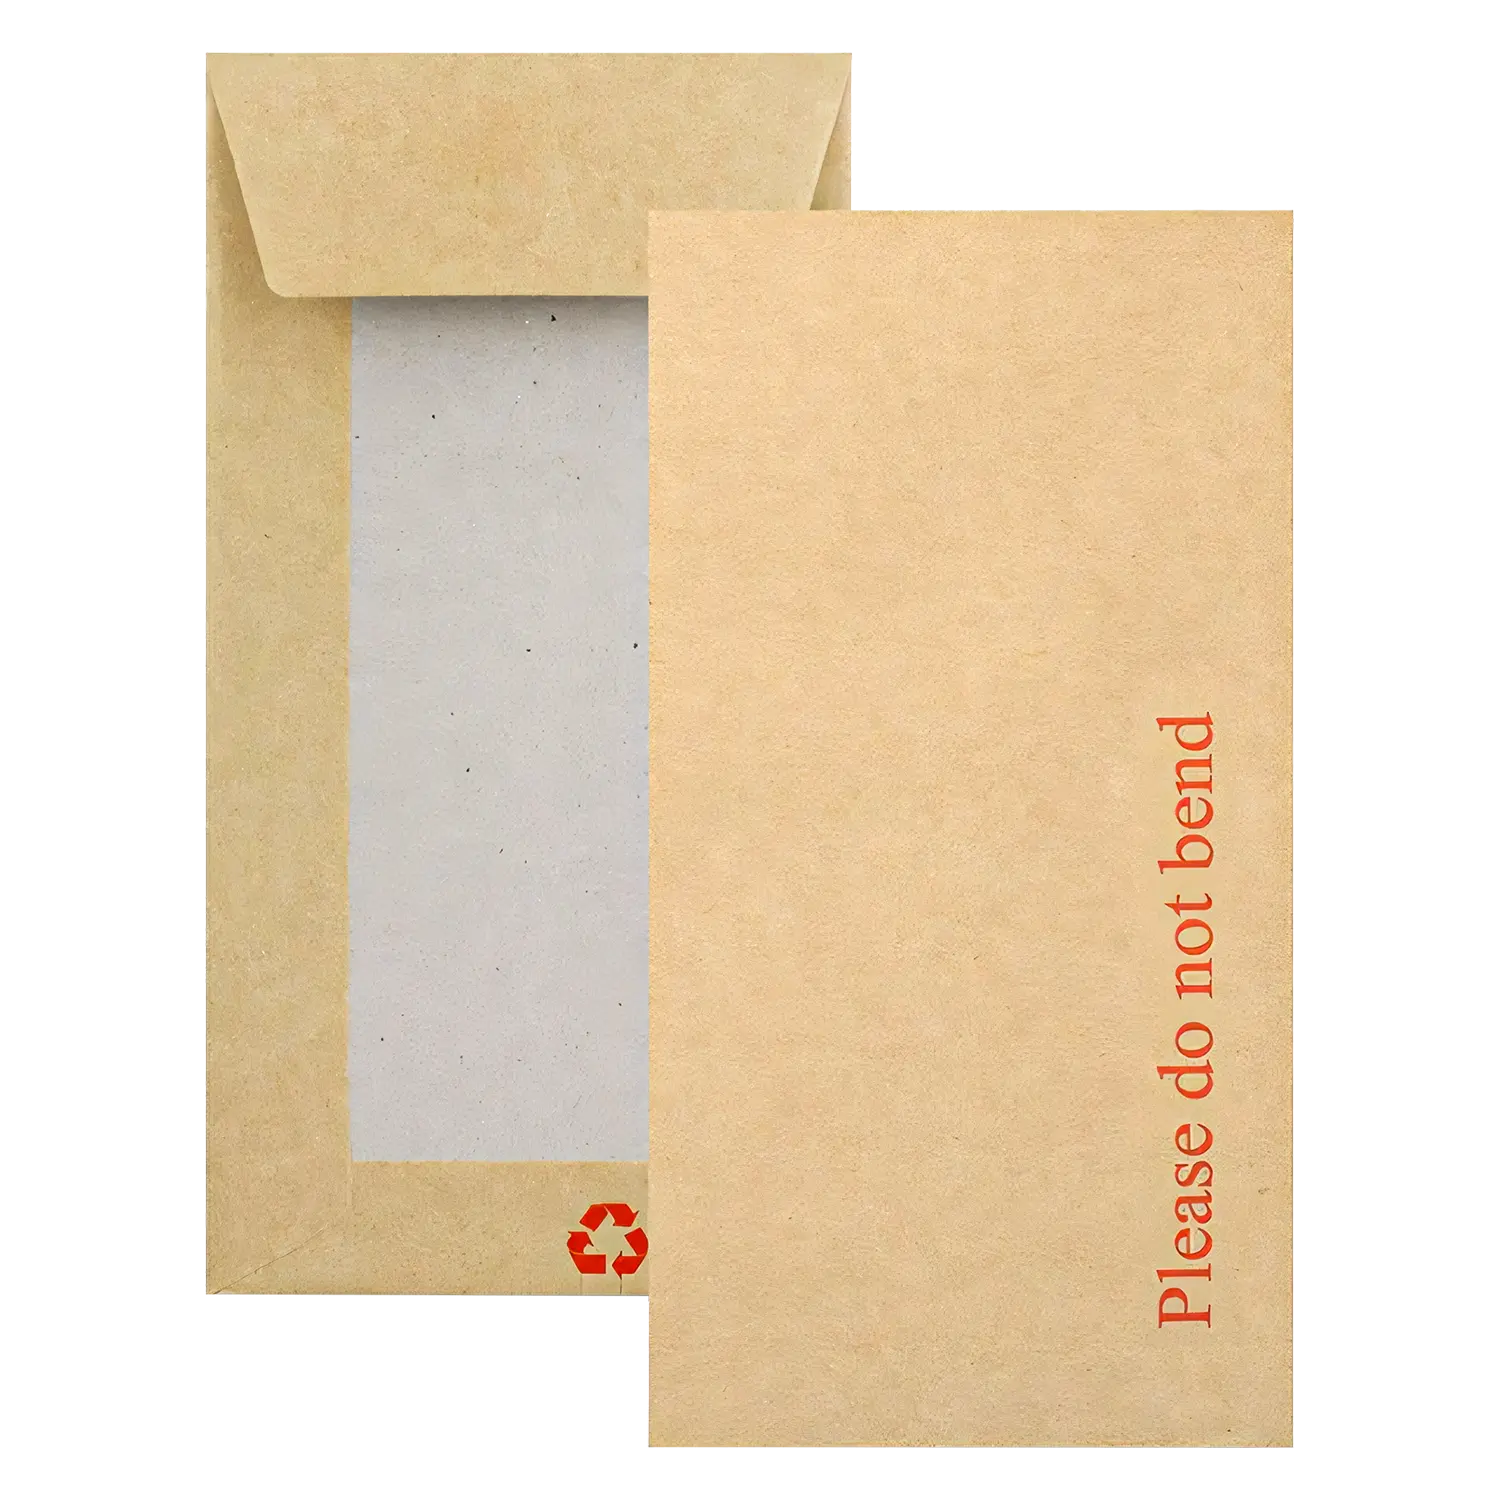 Do Not Bend Envelopes - 6.38x4.48 Inch